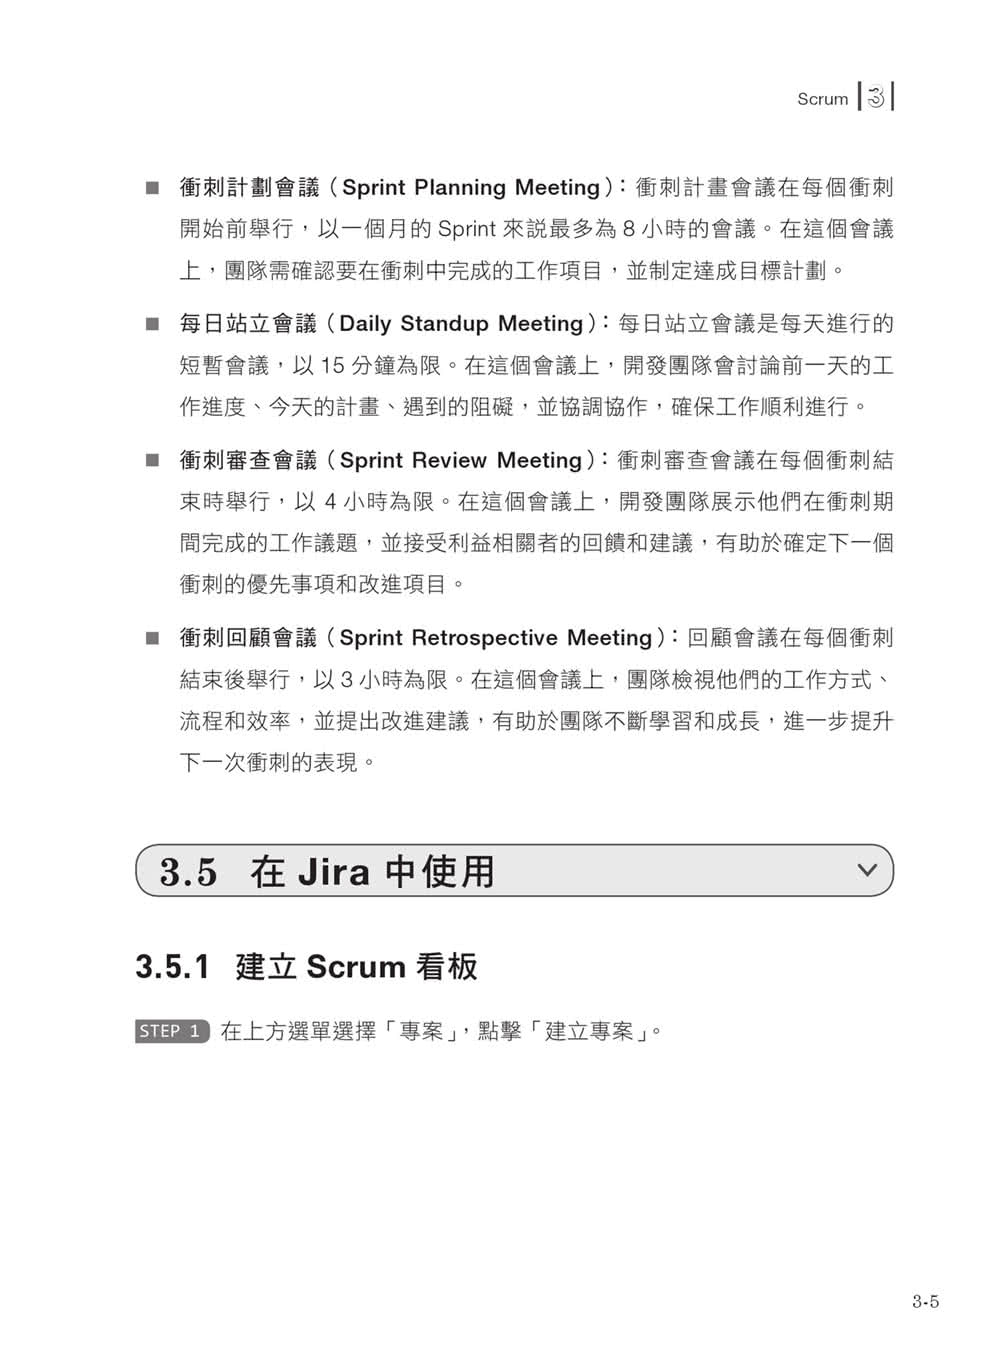 Jira 全方位應用：深入解析 Kanban × 超強外掛，掌握敏捷開發的核心工具